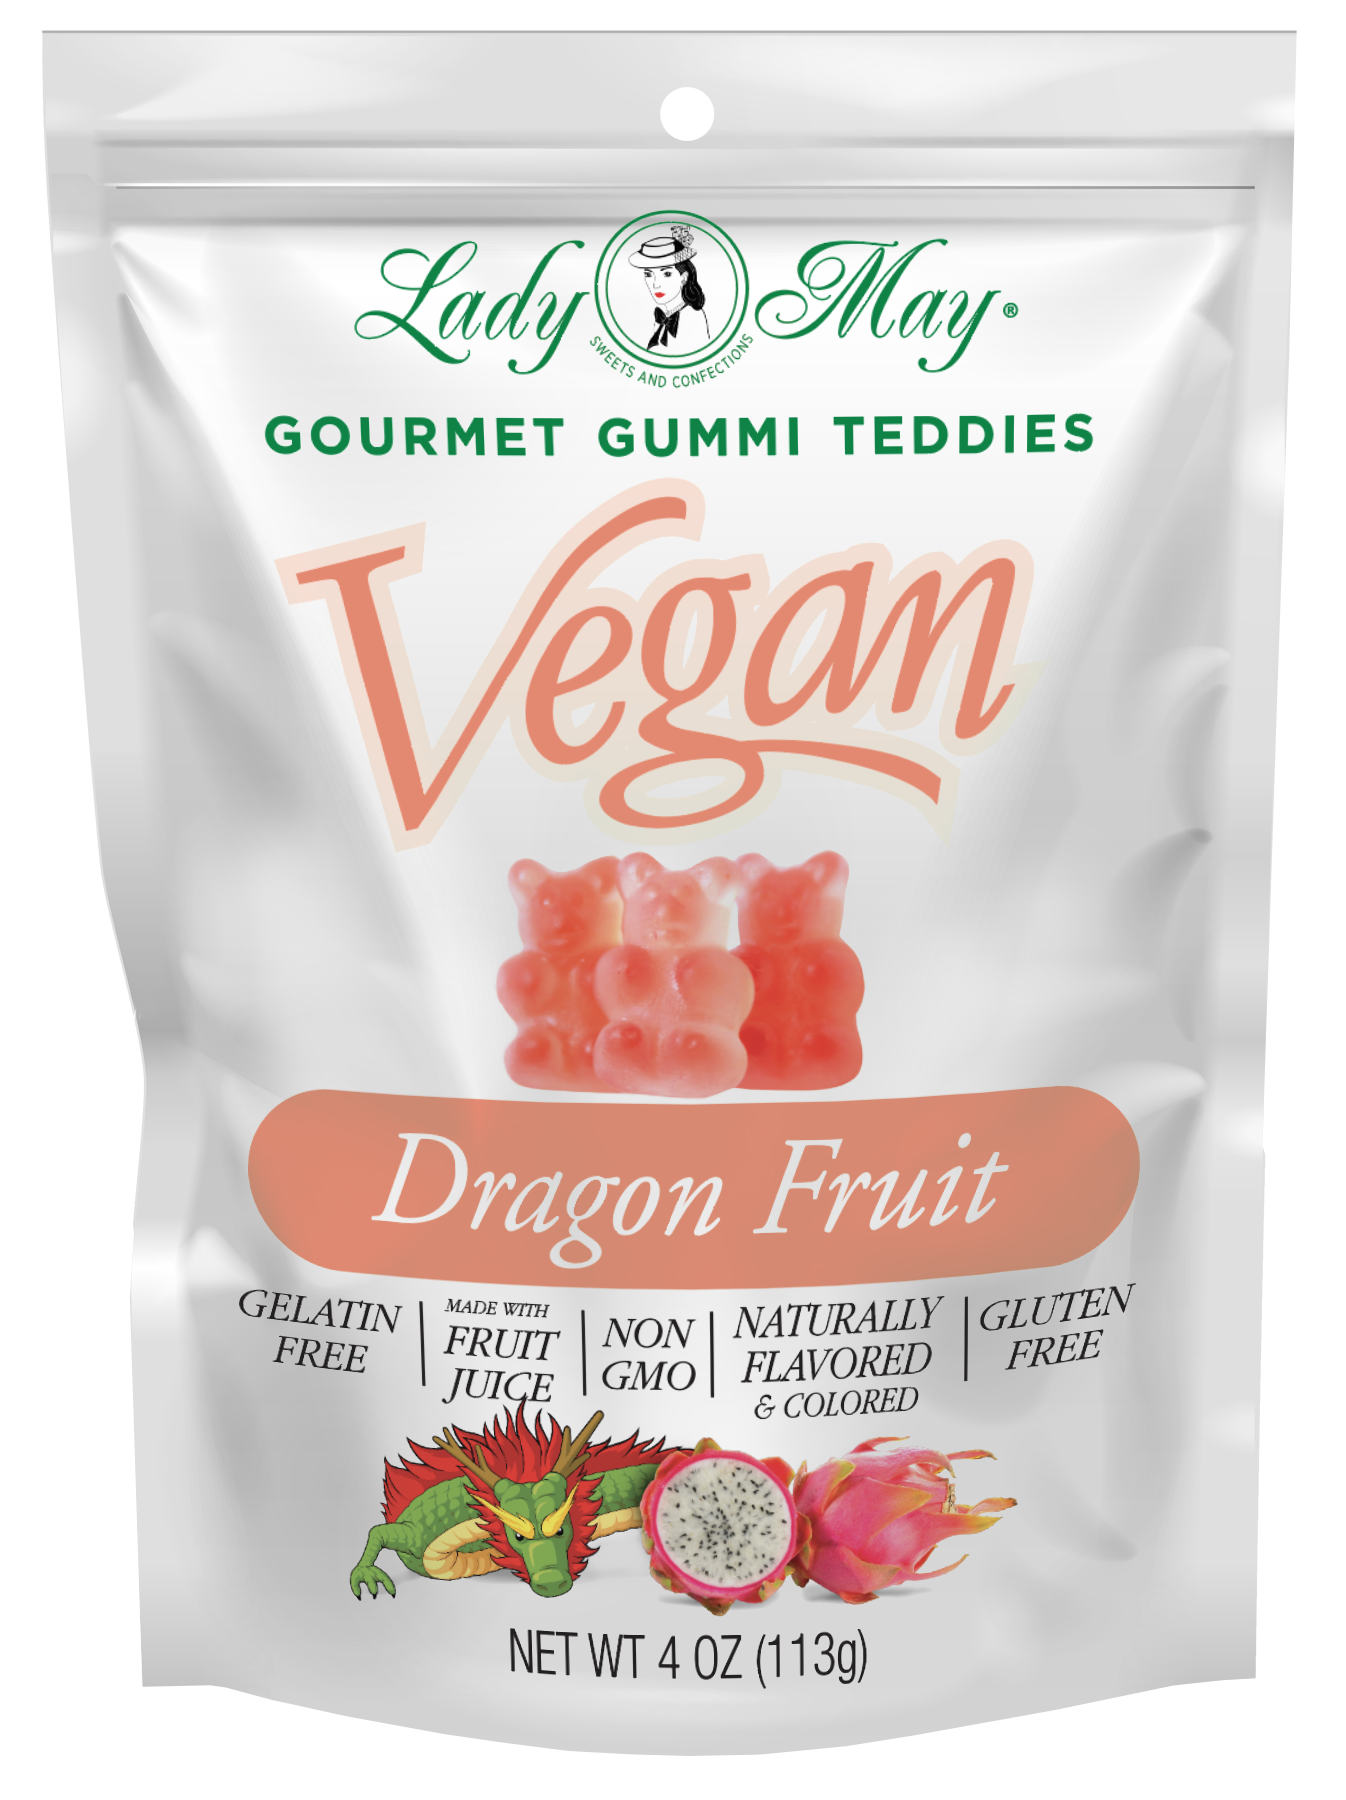 Vegan Gourmet Dragon Fruit Gummi Teddies